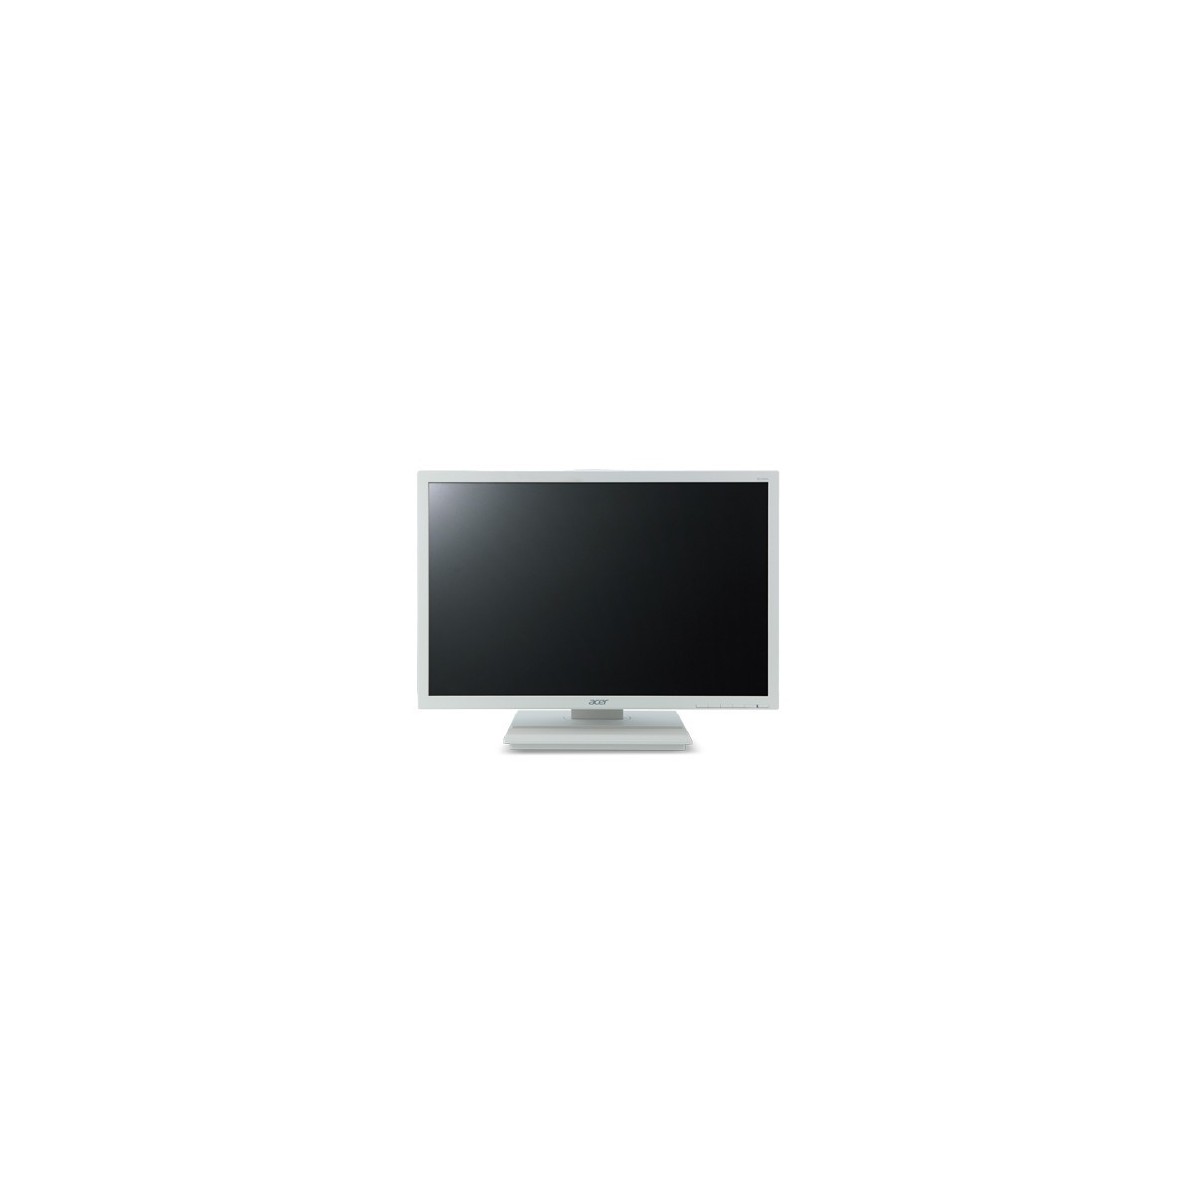 Acer Professional 226WLwmdr - 55.9 cm (22) - 1680 x 1050 pixels - WSXGA+ - LCD - 5 ms - White